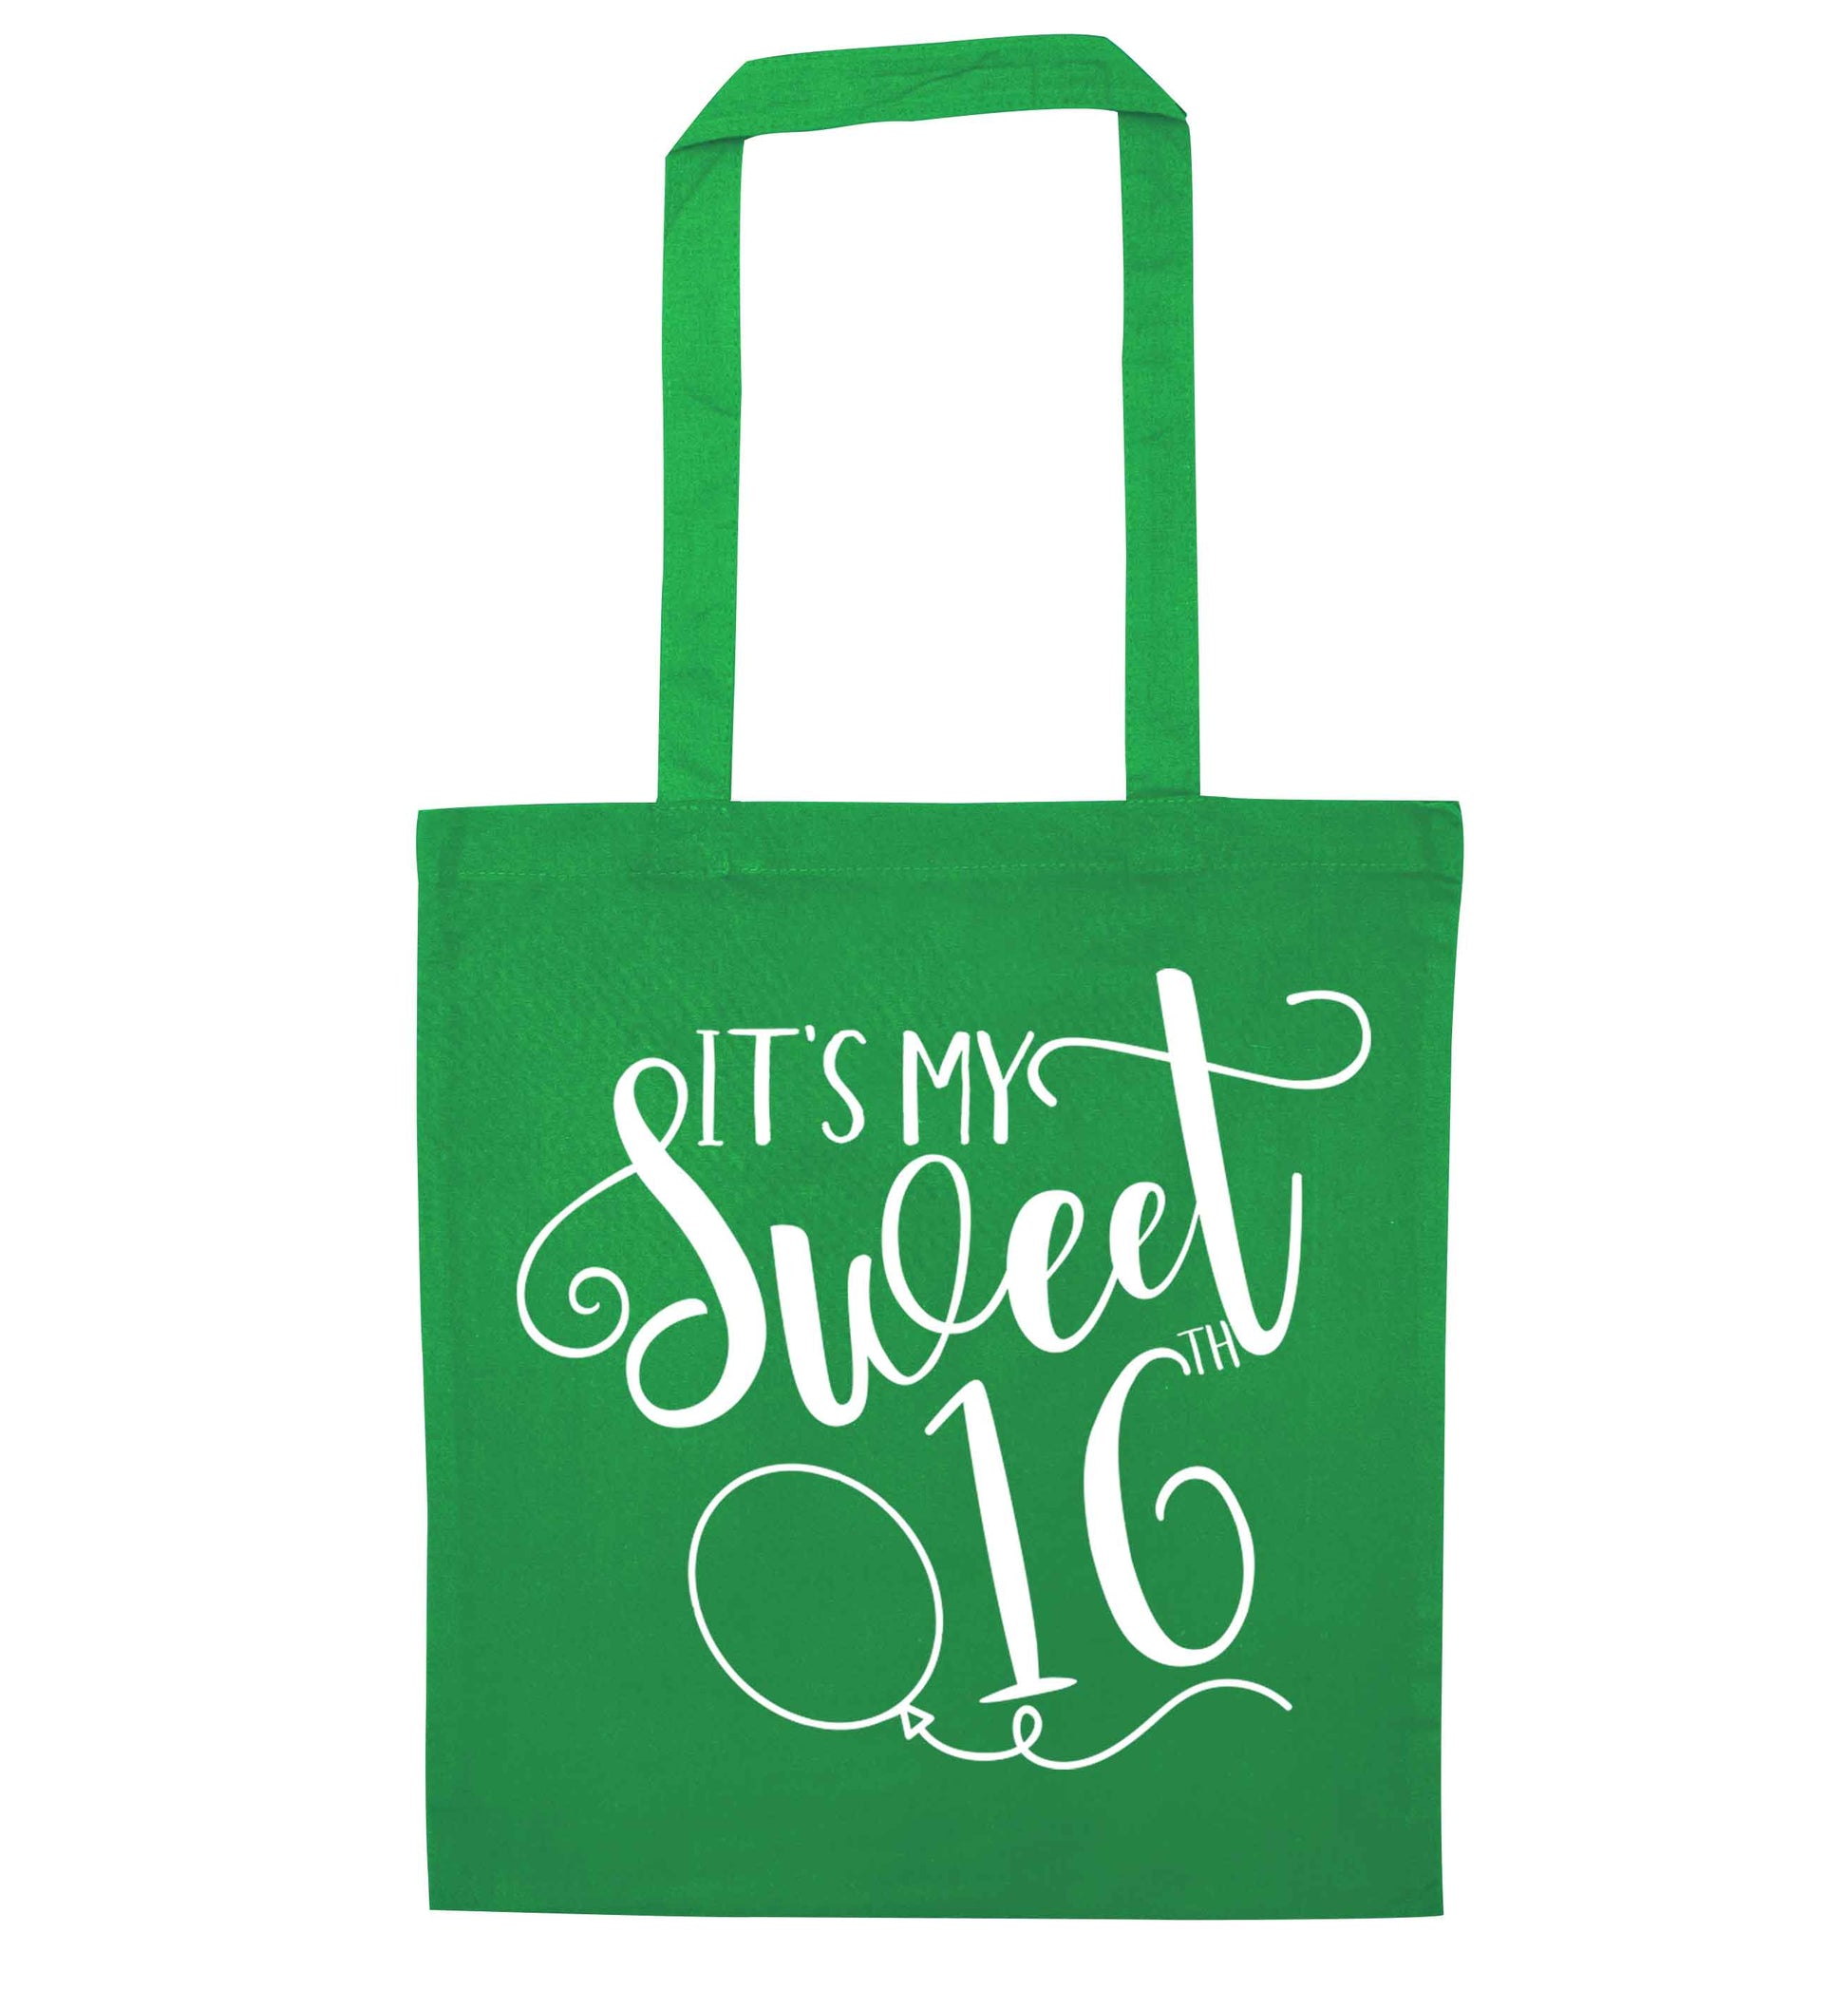 It's my sweet 16thgreen tote bag